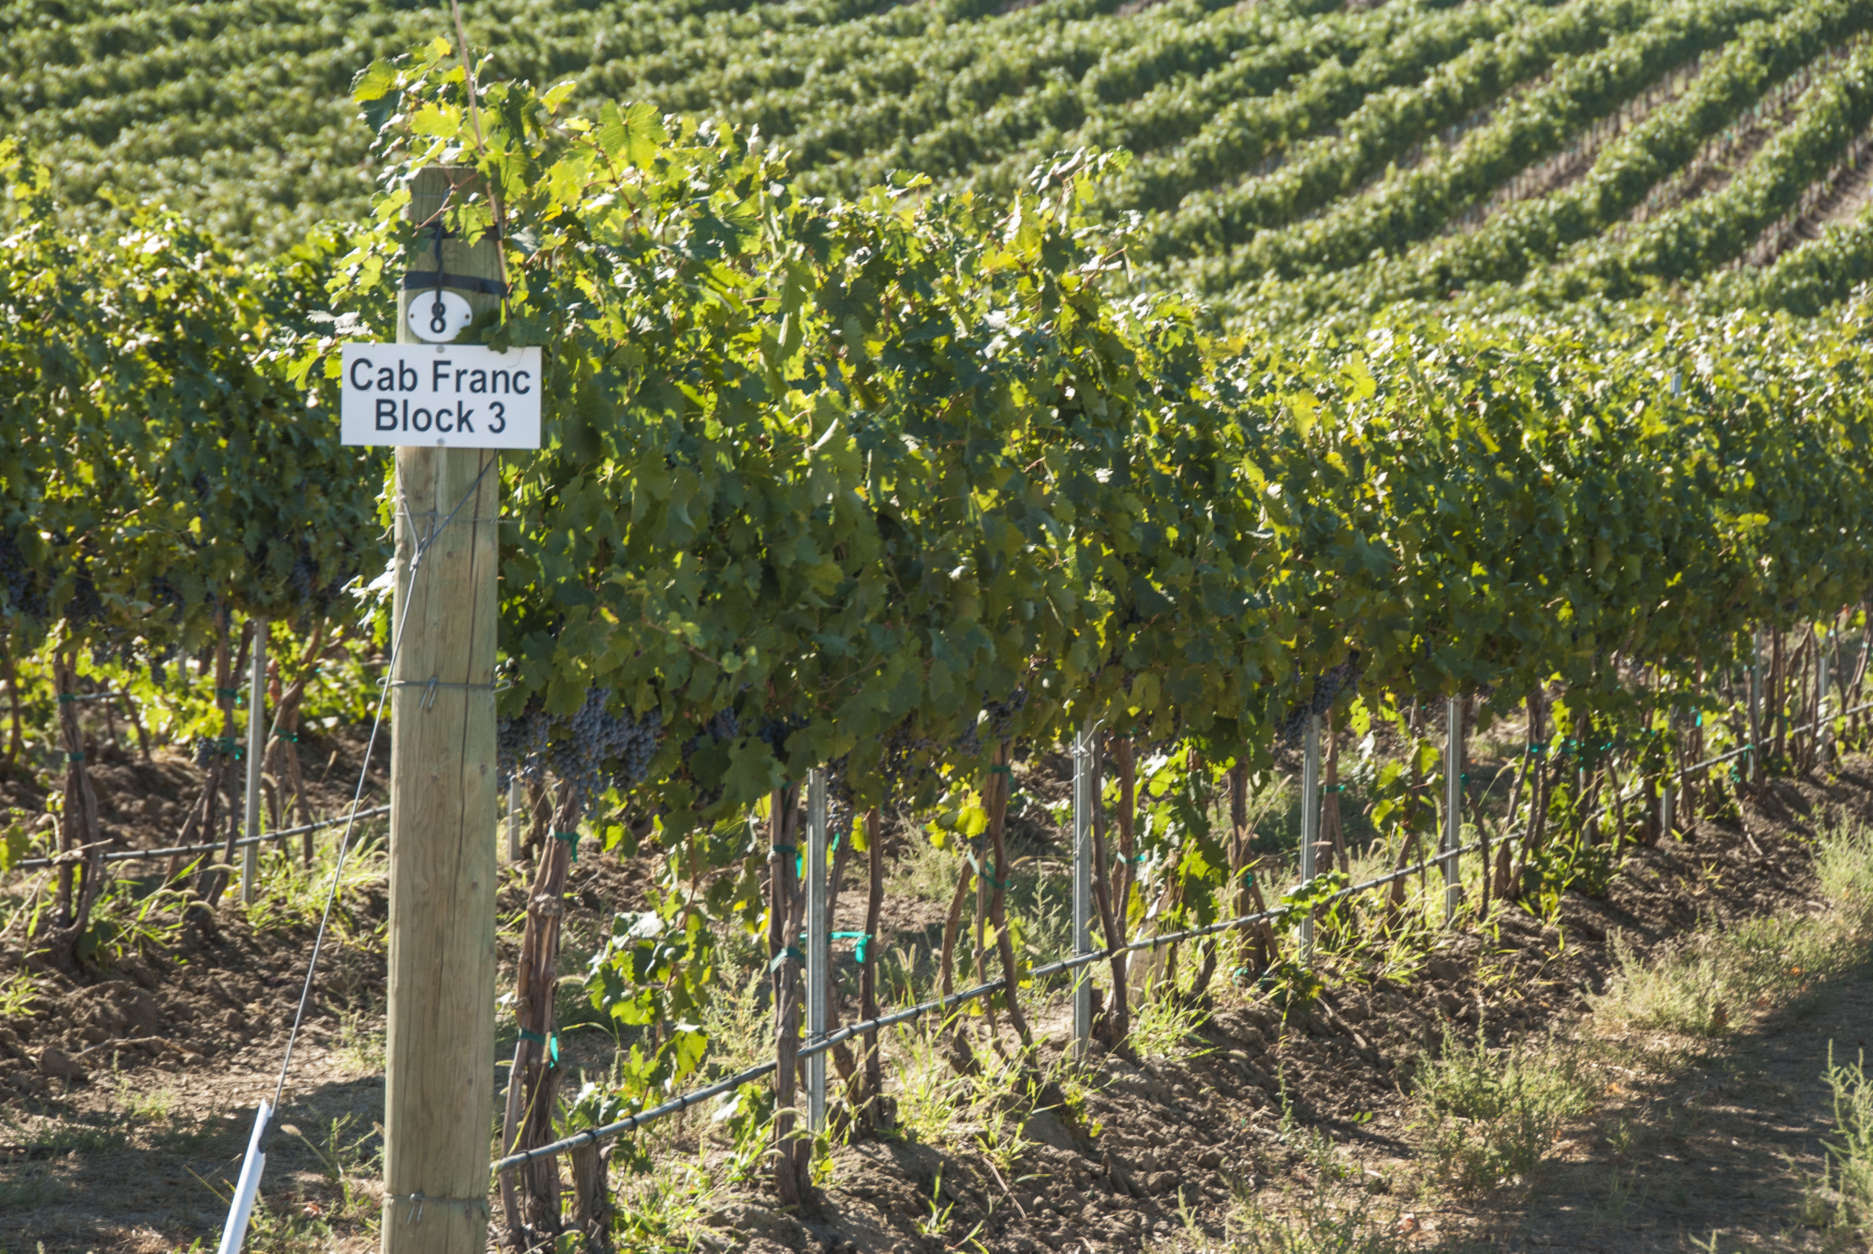 Cab Franc Block 3, Rows of wine grapes at a vineyard in Walla Walla region of eastern Washington